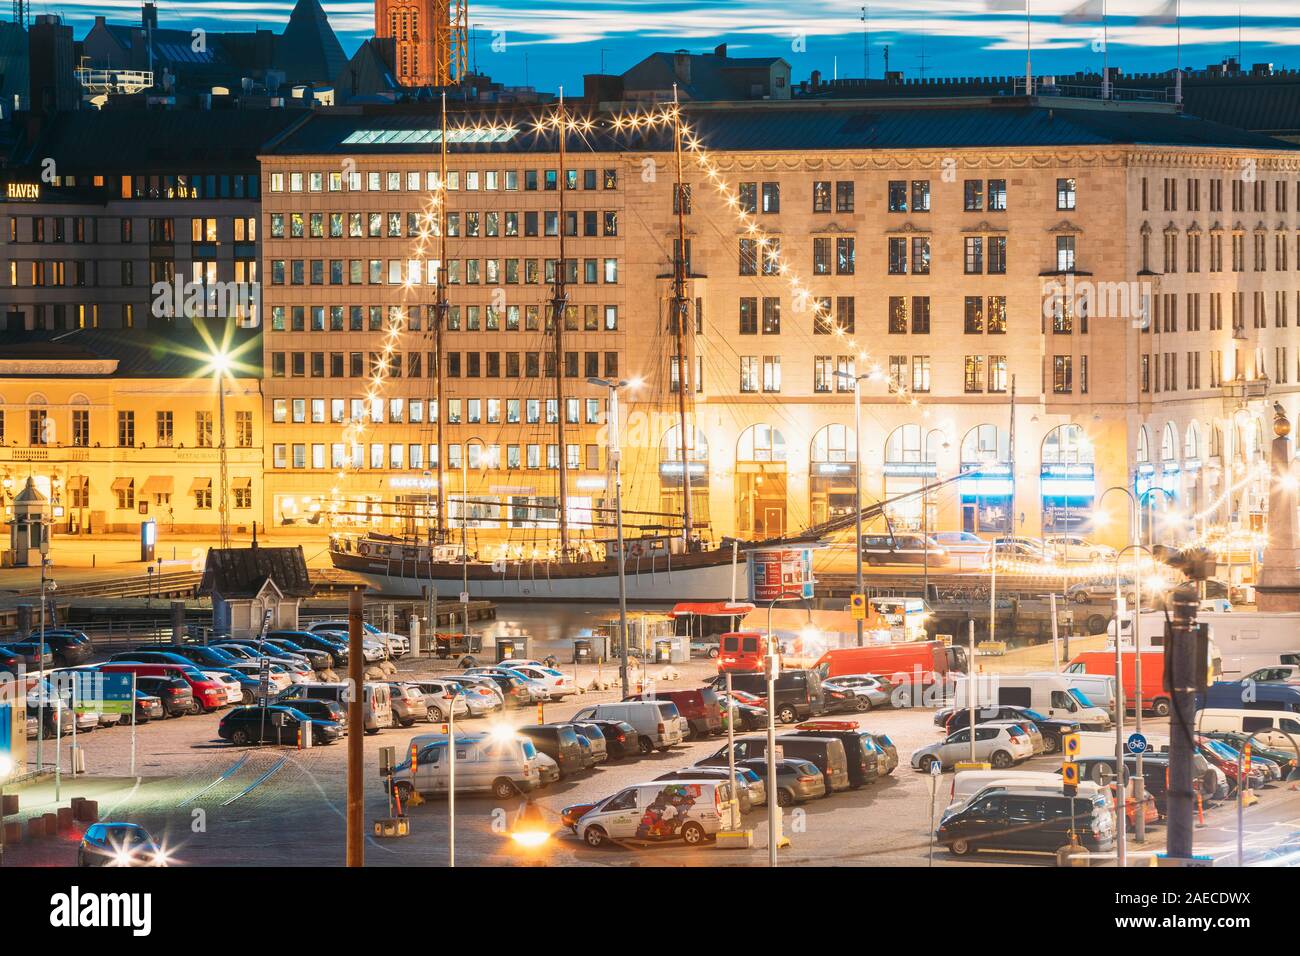 Helsinki, Finland - December 10, 2016: Evening Night View Of Market Square And Traffic On Pohjoisesplanadi Street. Stock Photo